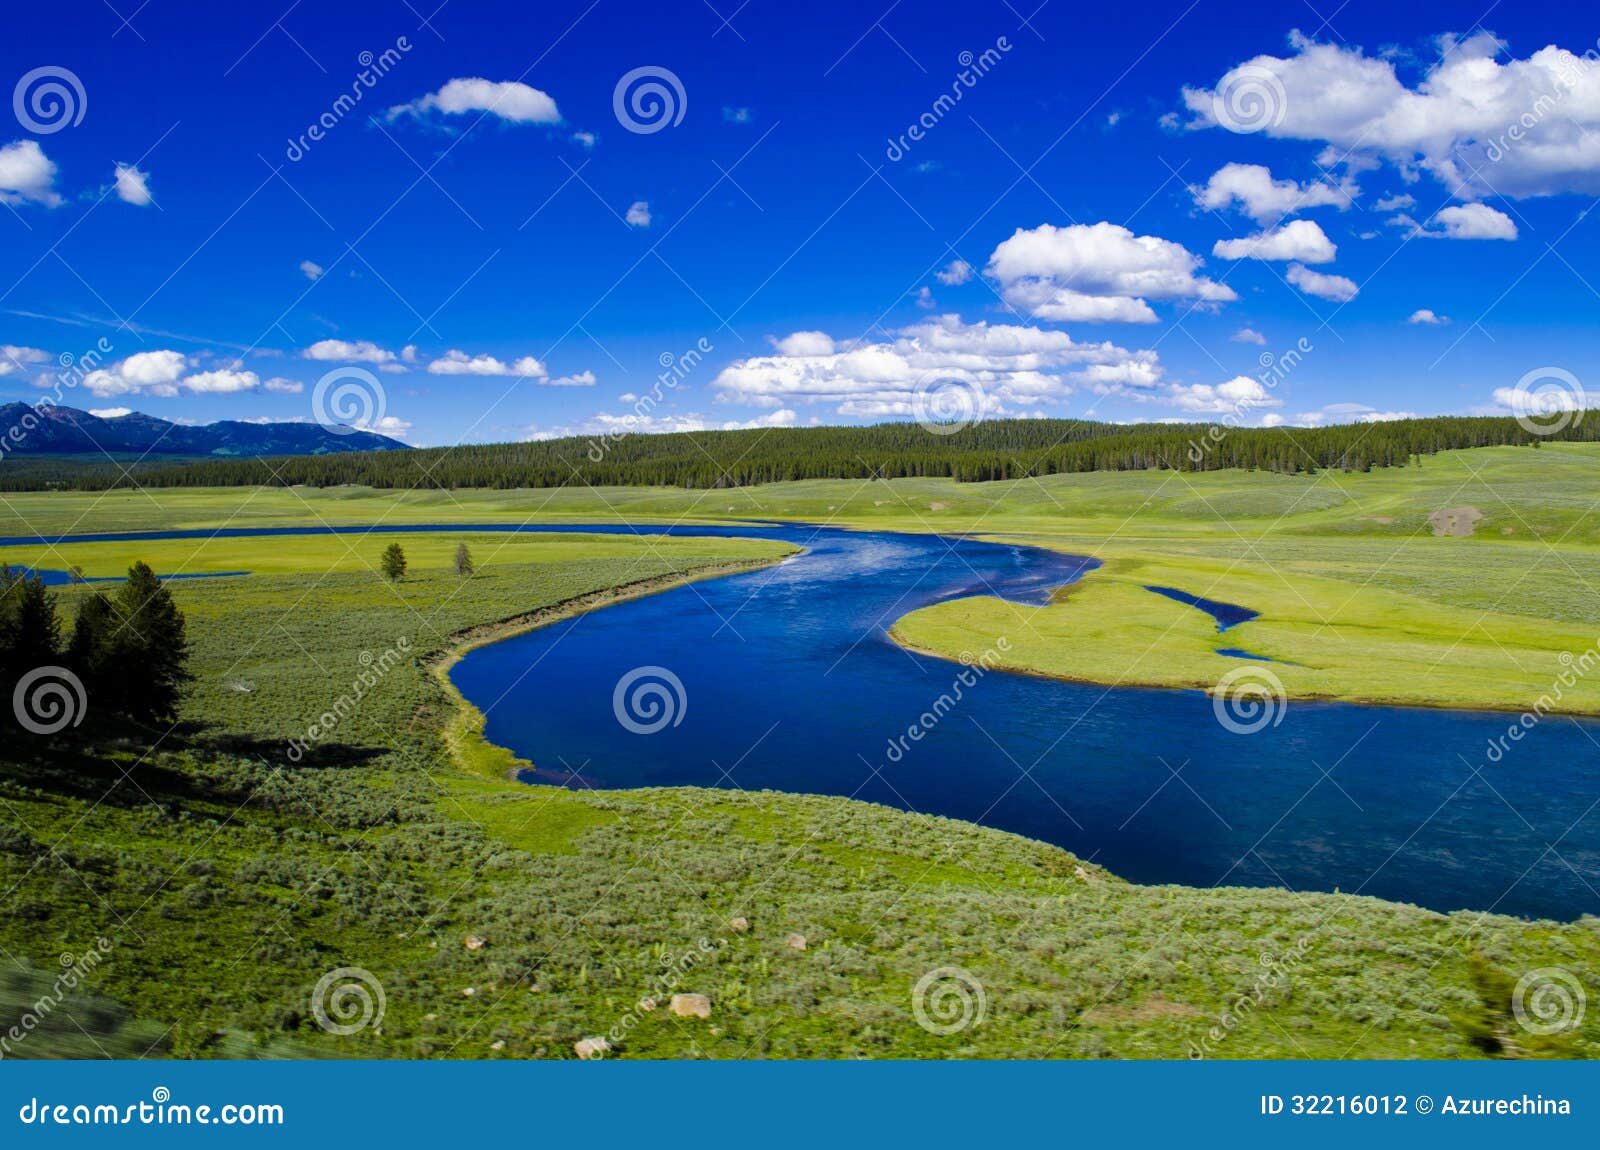 yellowstone river in hayden valley